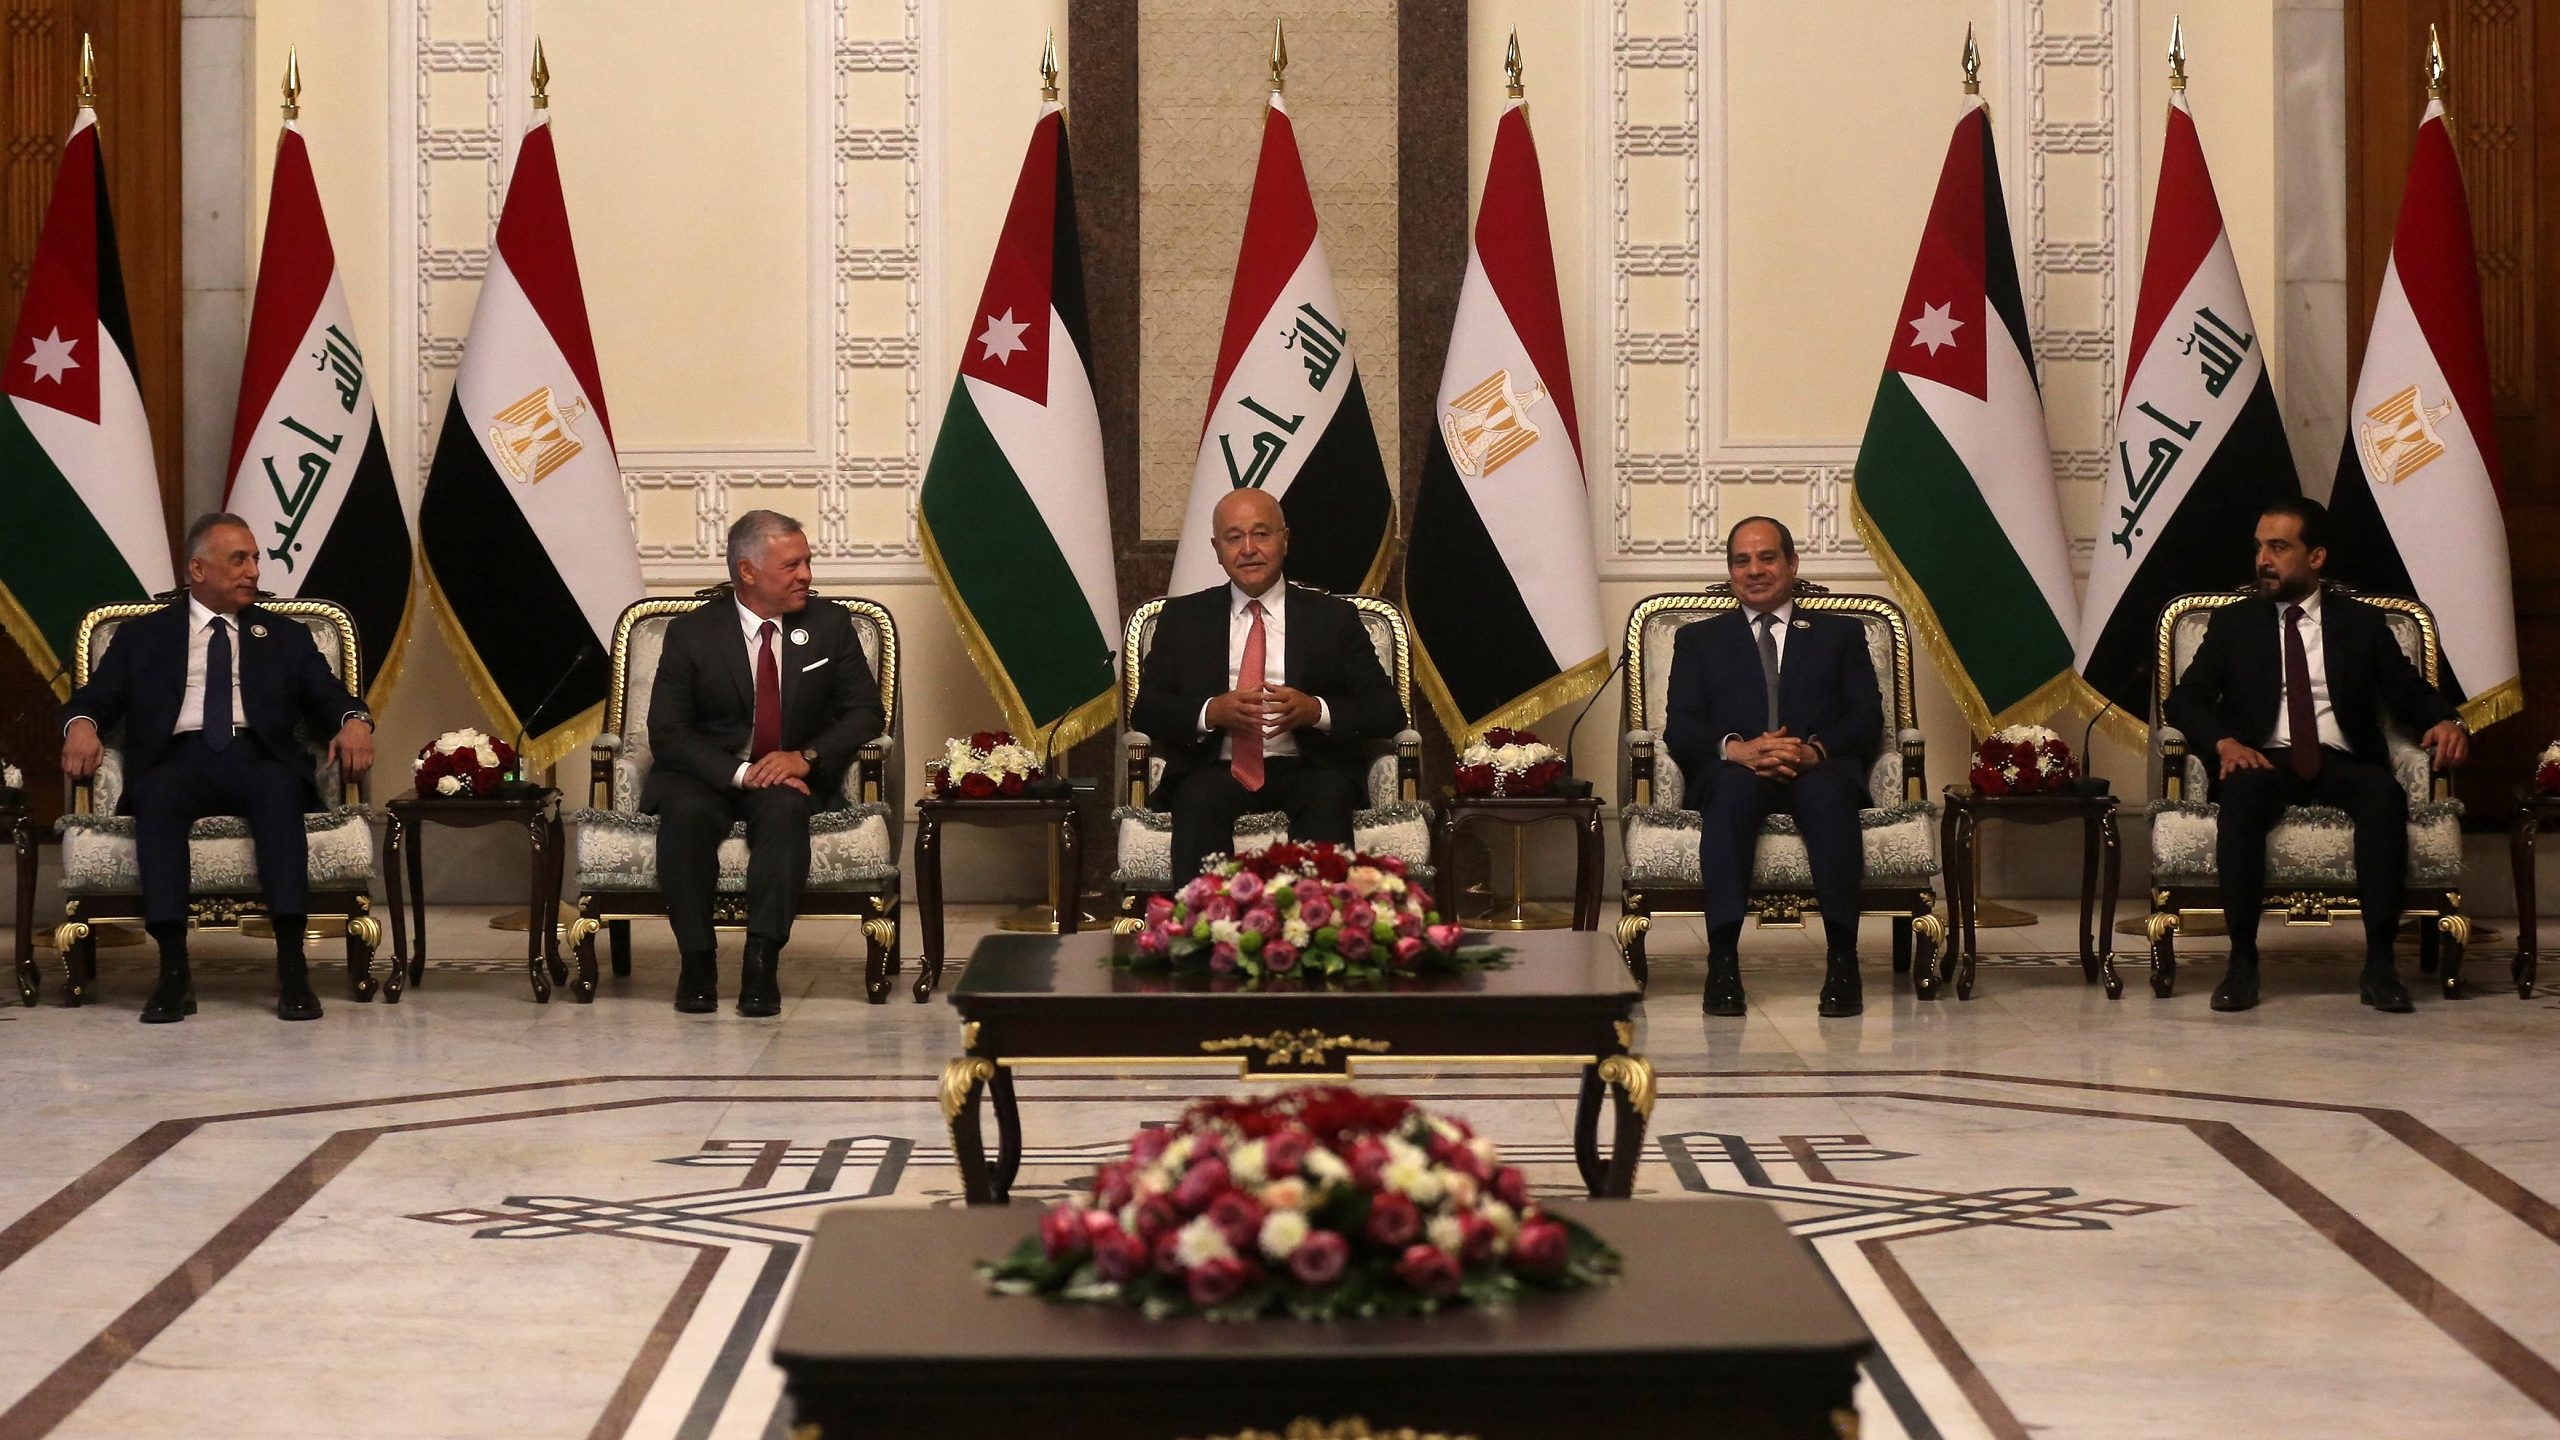 Leaders of Iraq, Jordan and Egypt Meet to Cement Regional Economic Partnership